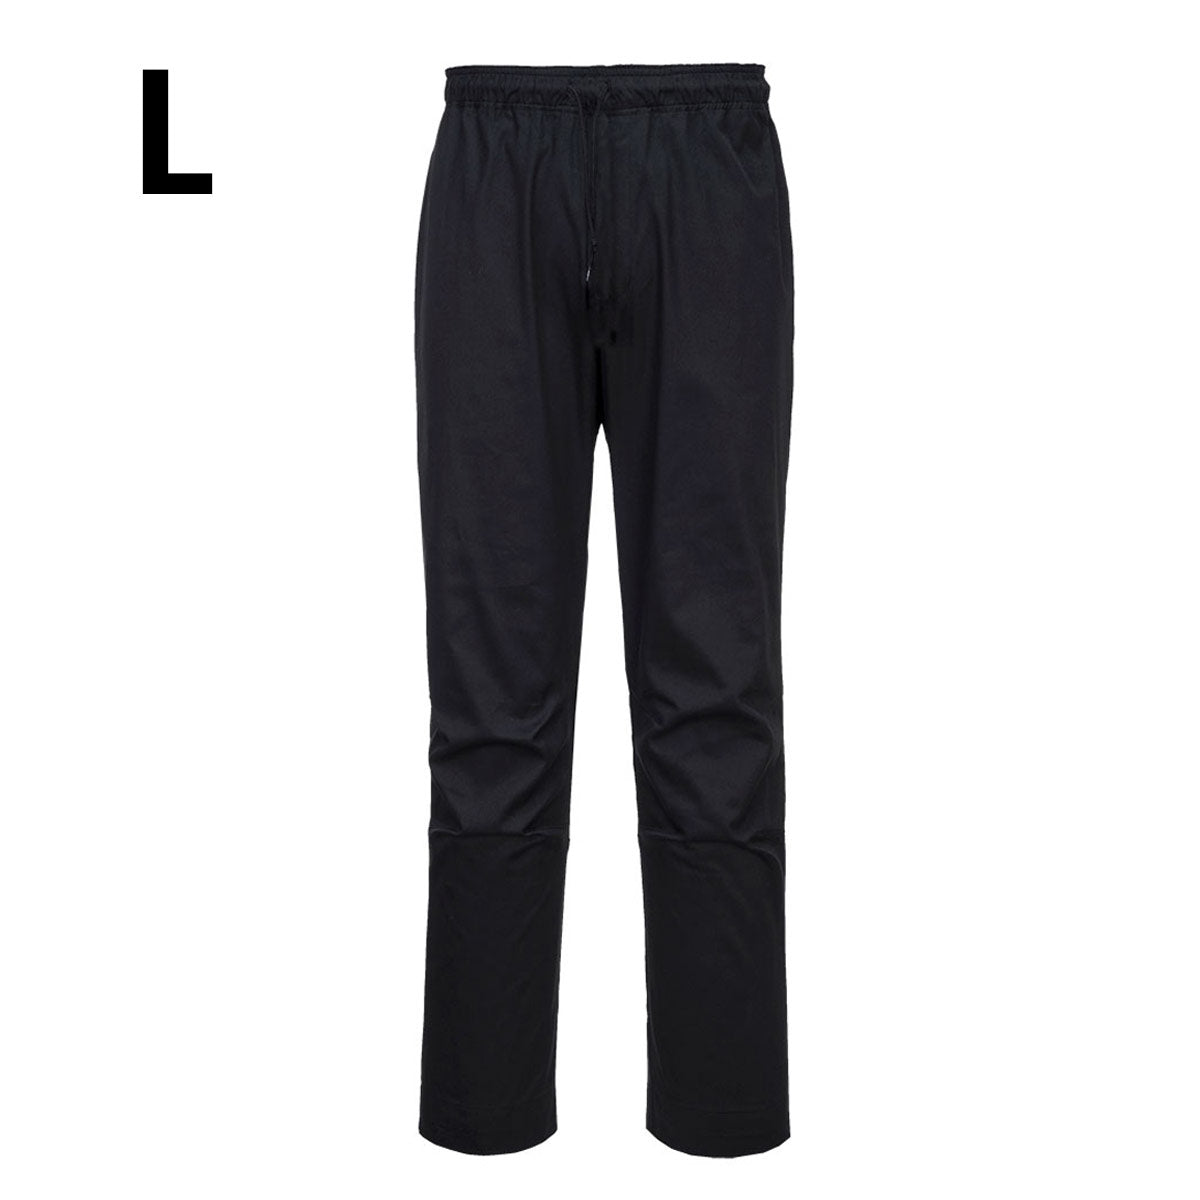 MeshAir Pro bukser med taljebånd - Sort - Størrelse: L